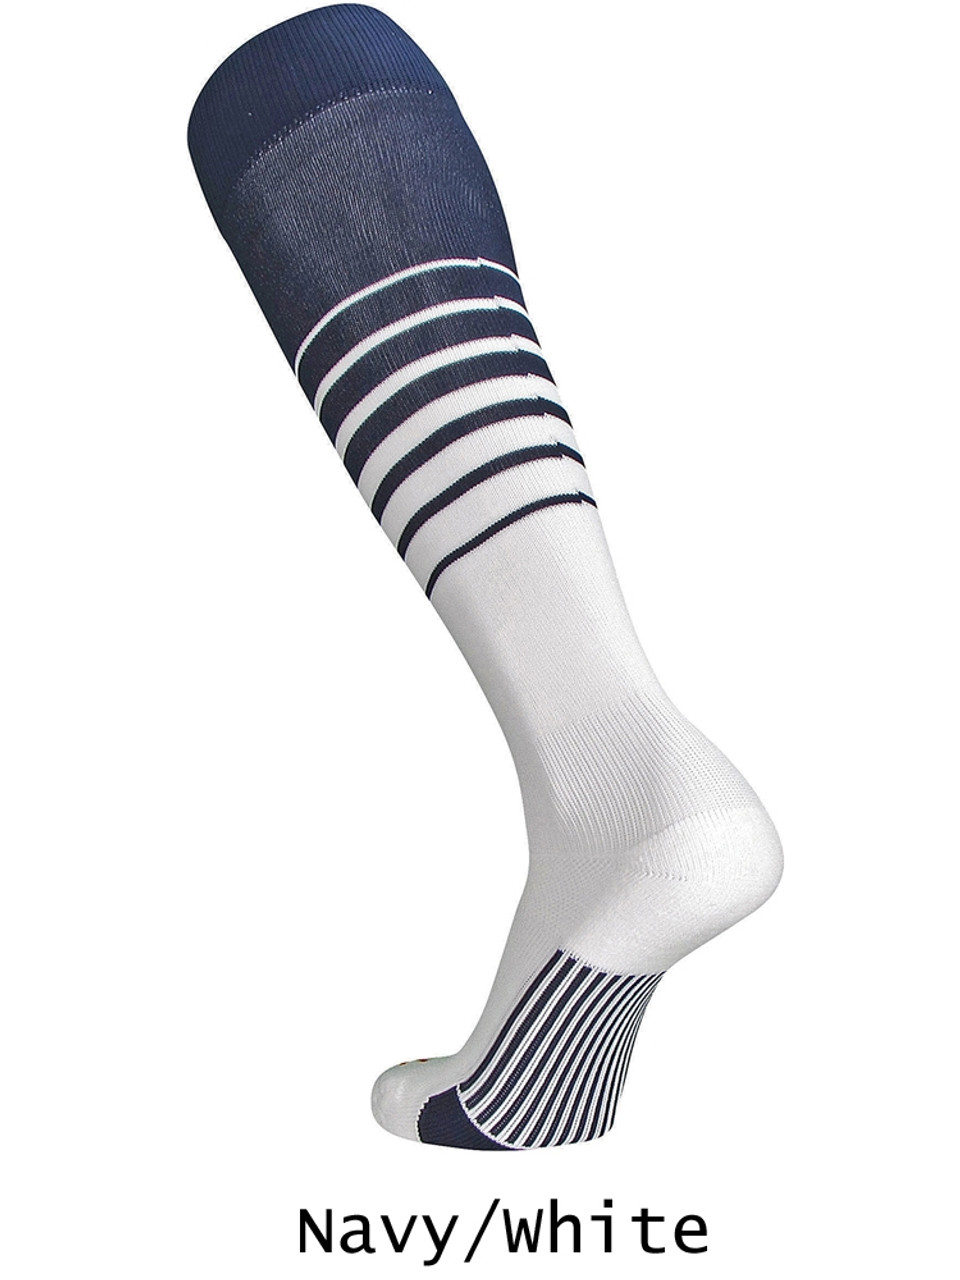 Breaker Over the Calf Soccer Sock - All Sports Uniforms